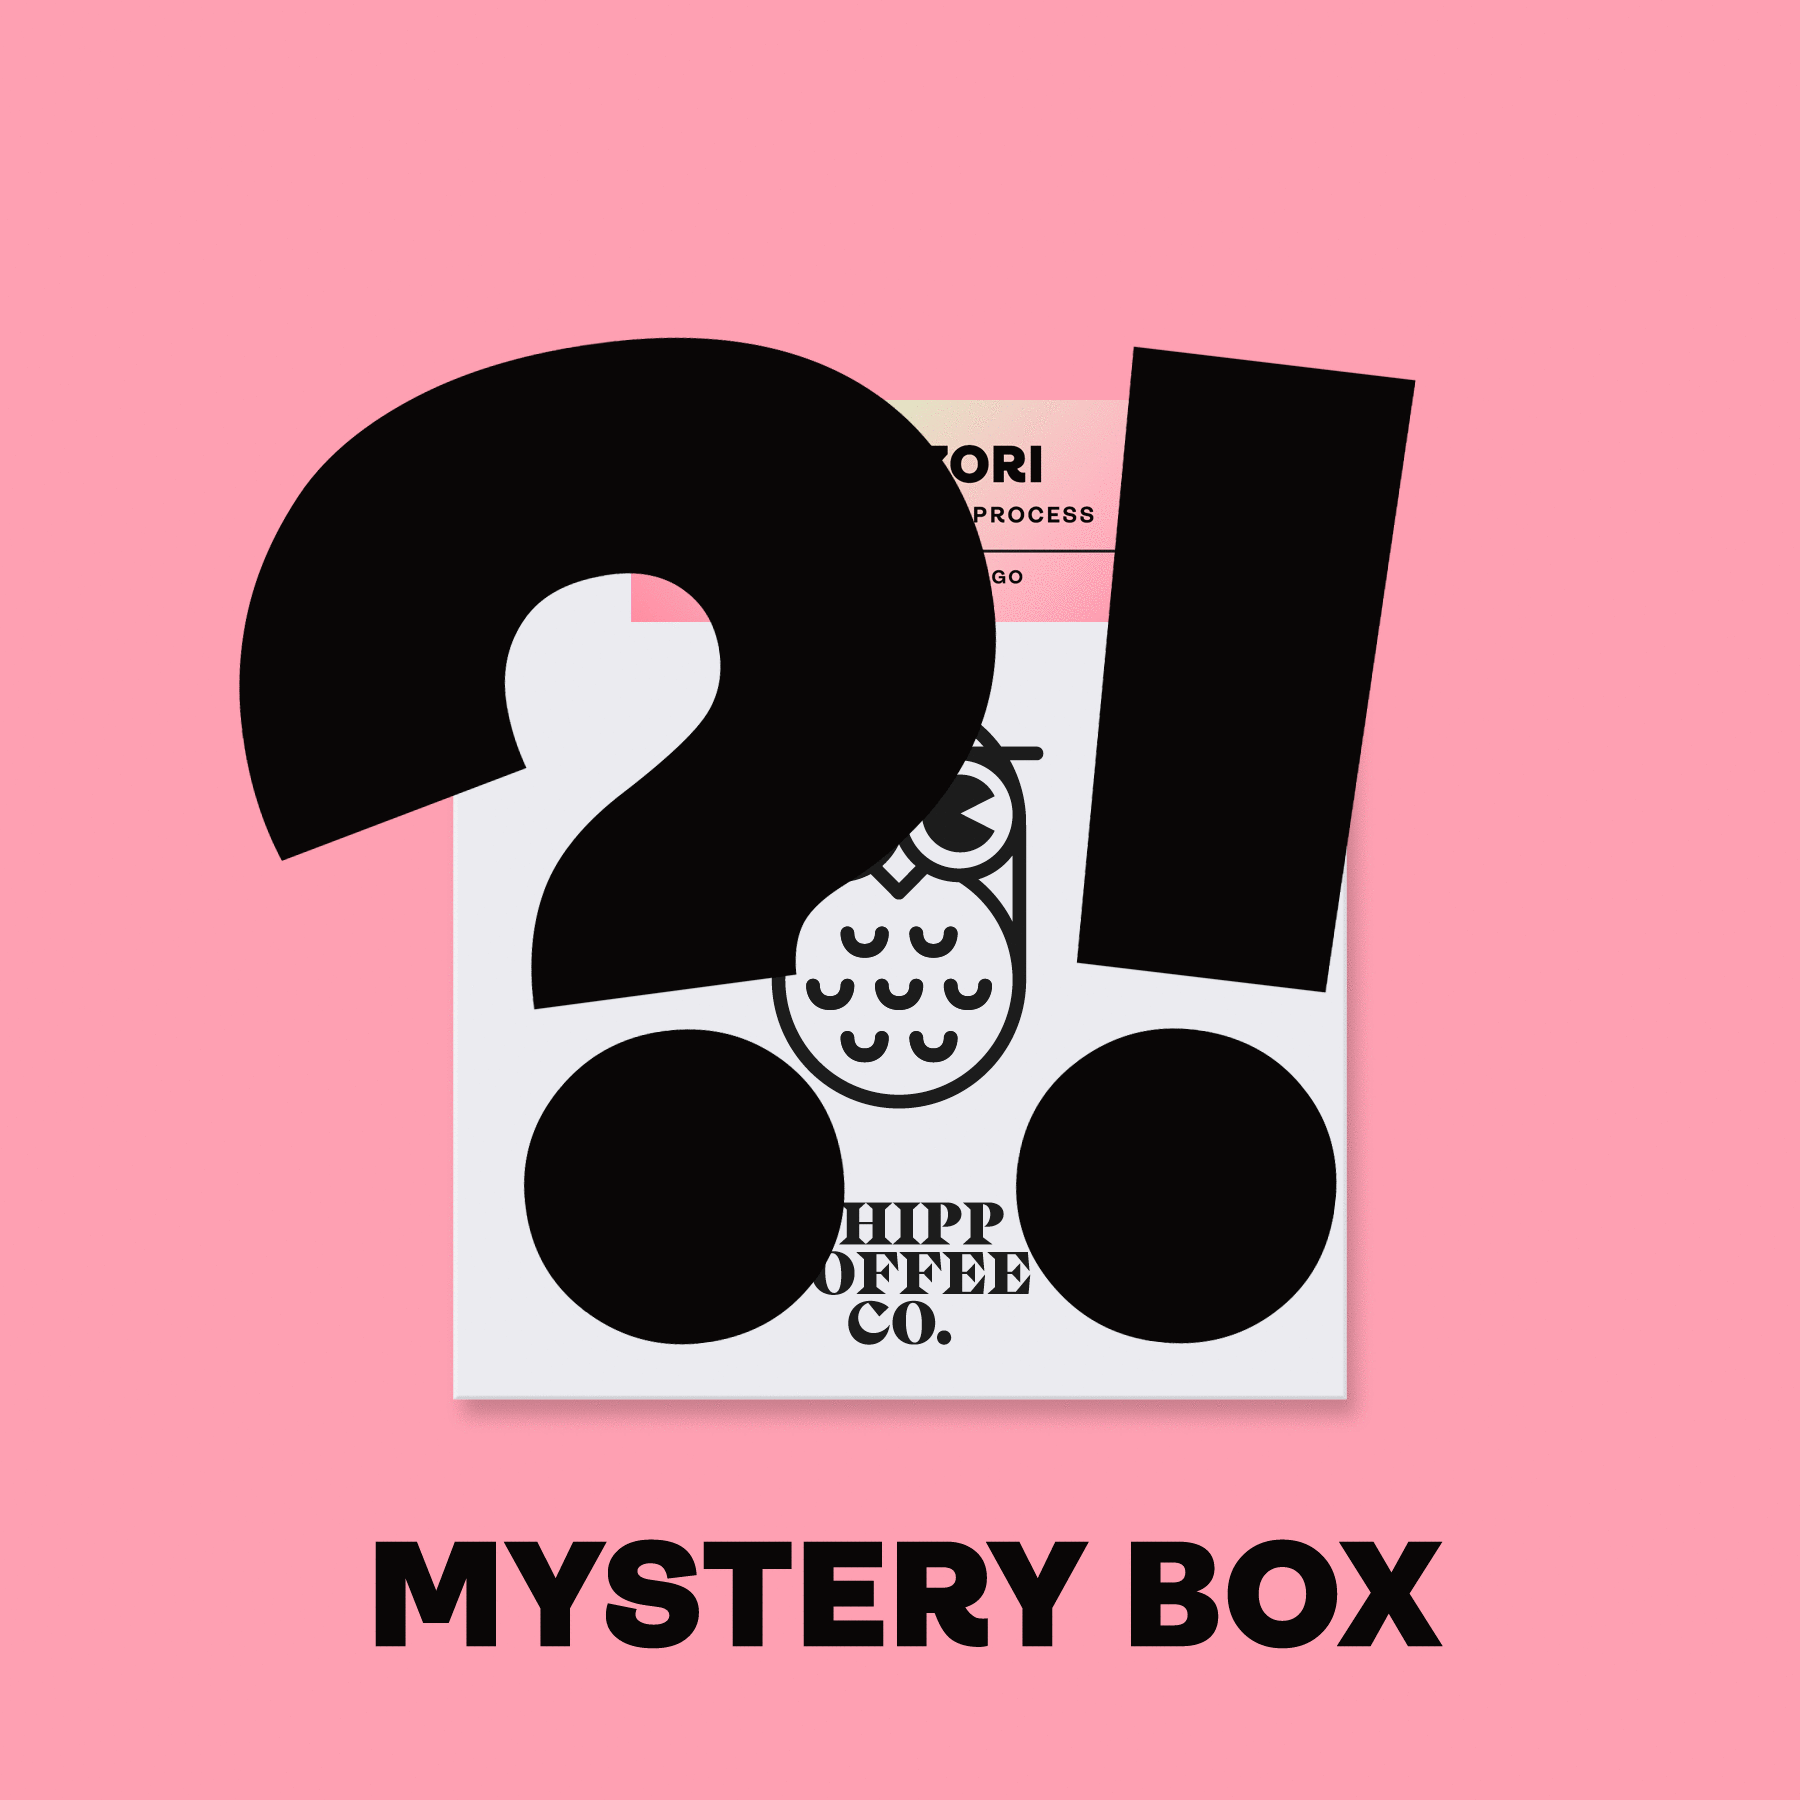 Dry (Process) January - Mystery Box?!